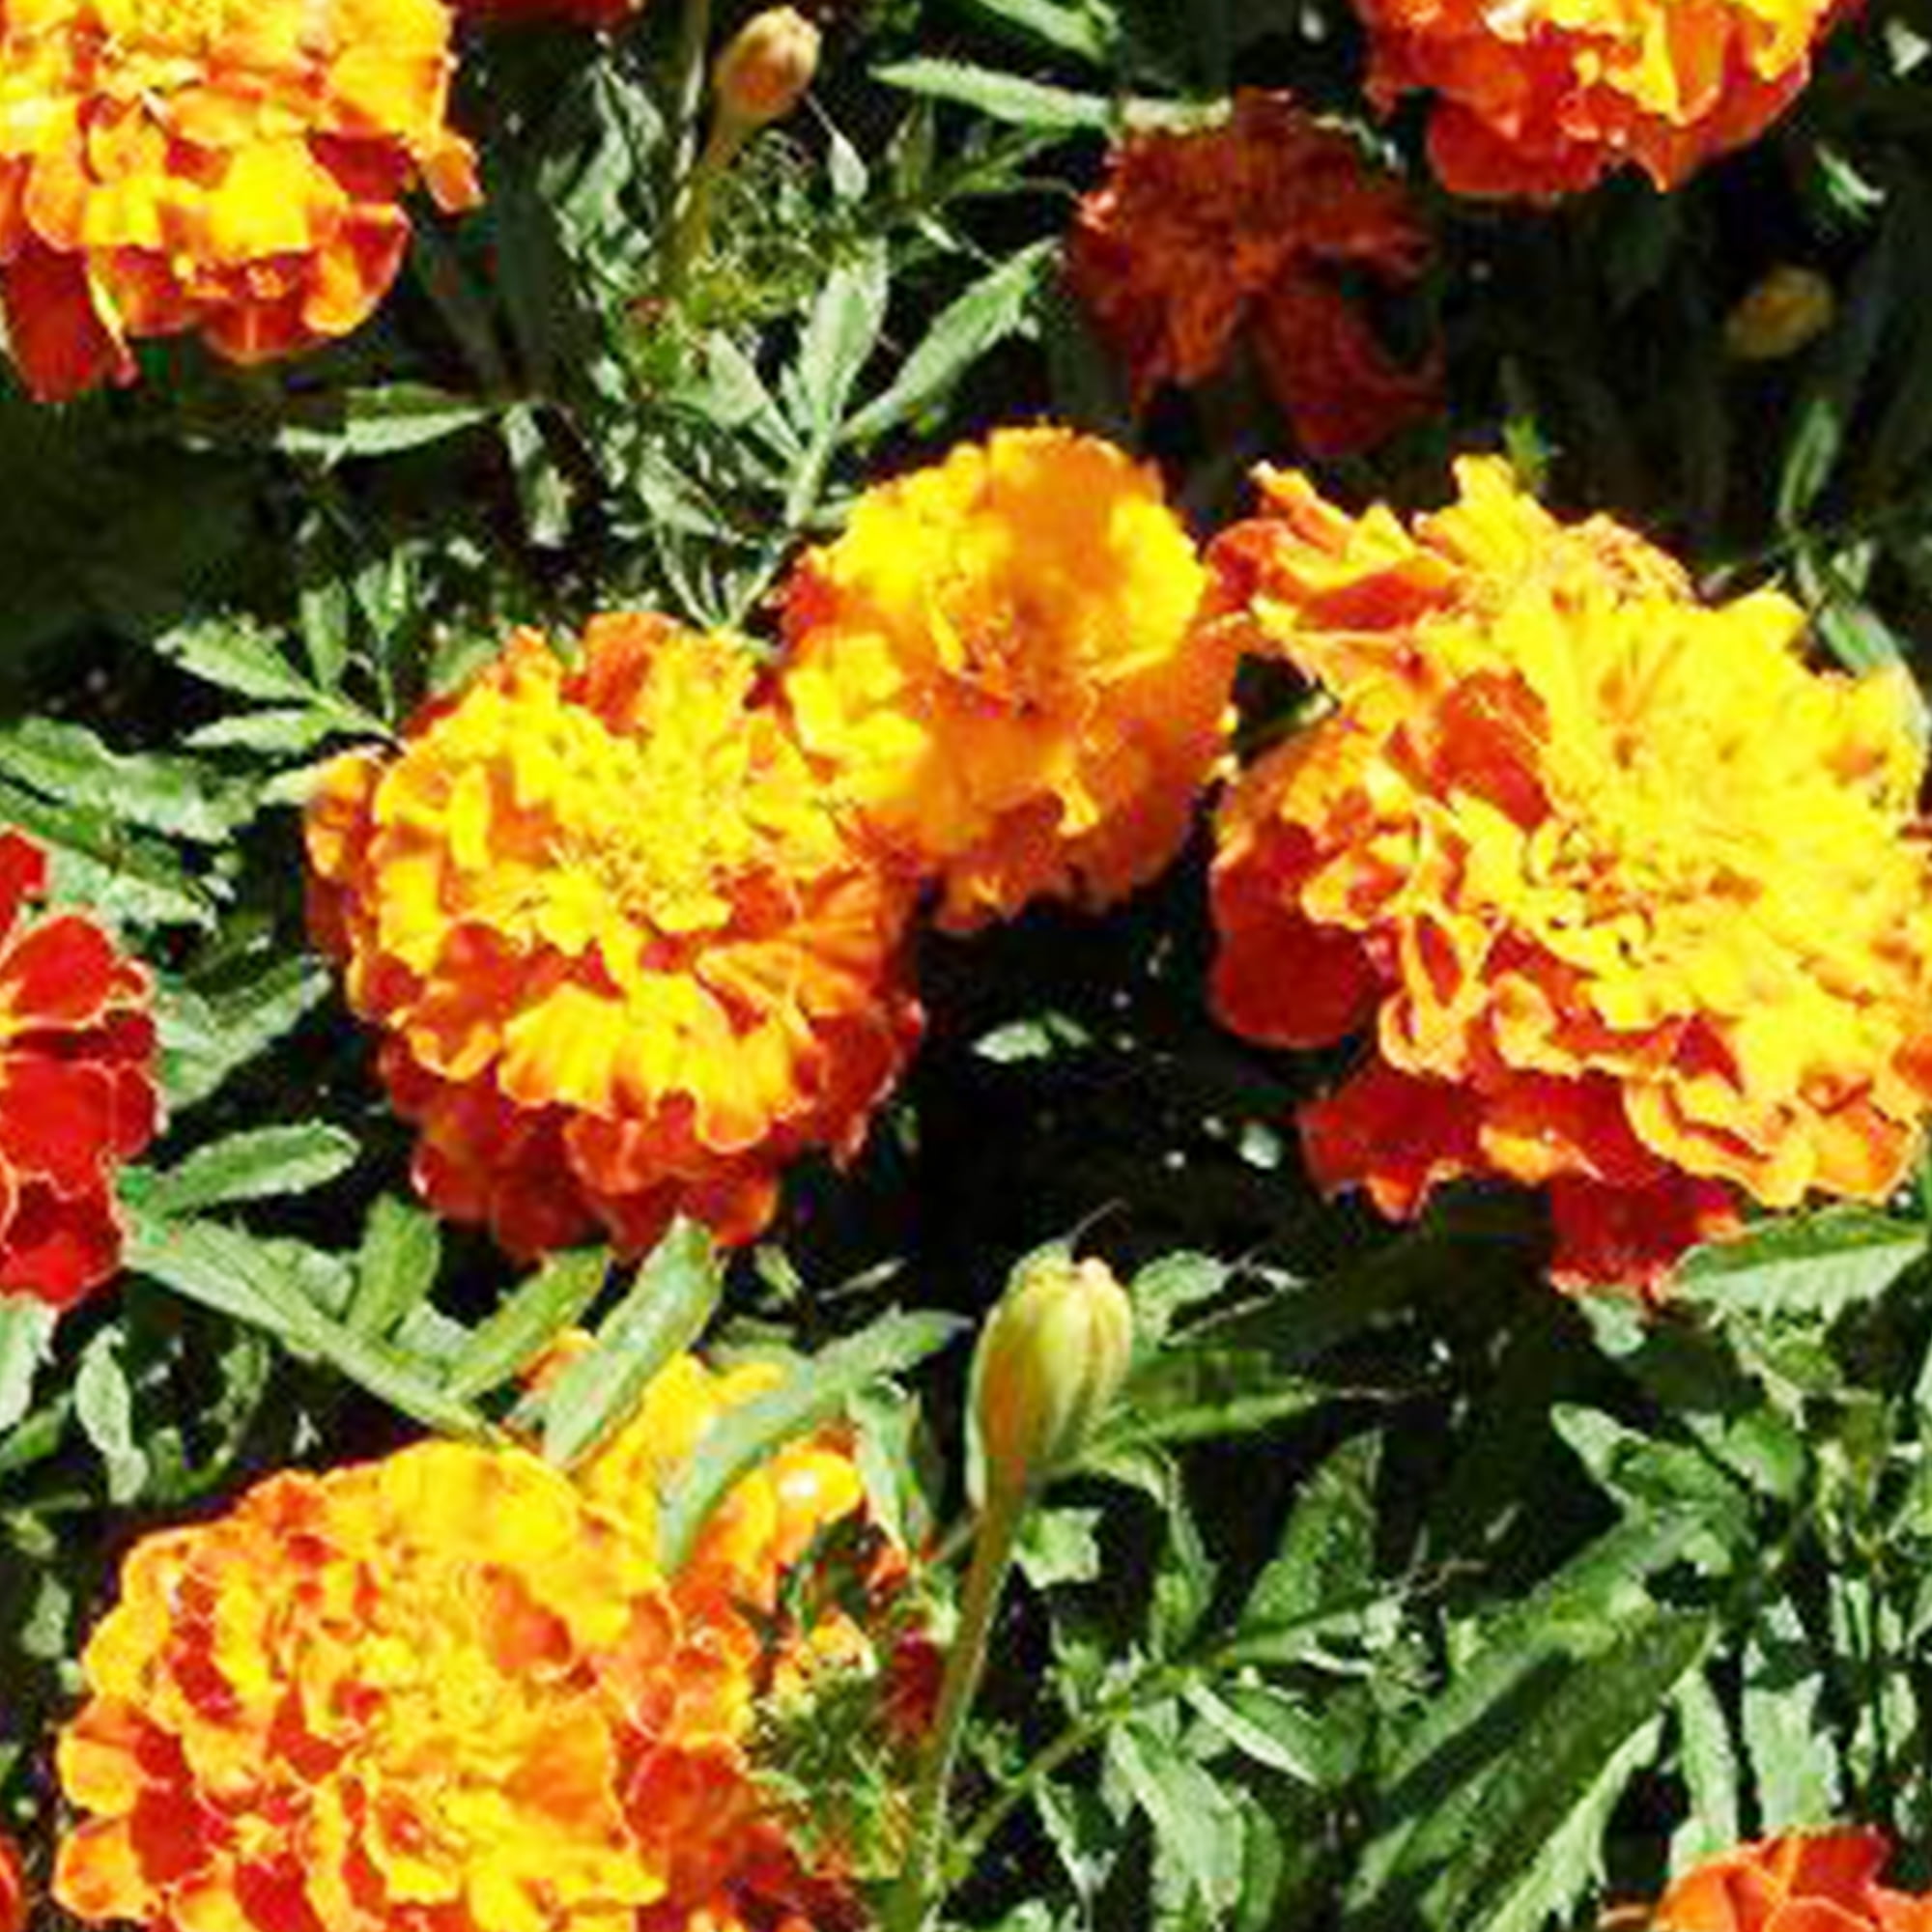 25 Marigold Seeds Orange Blooms Flowers Heirloom Annual Medicinal edible magic